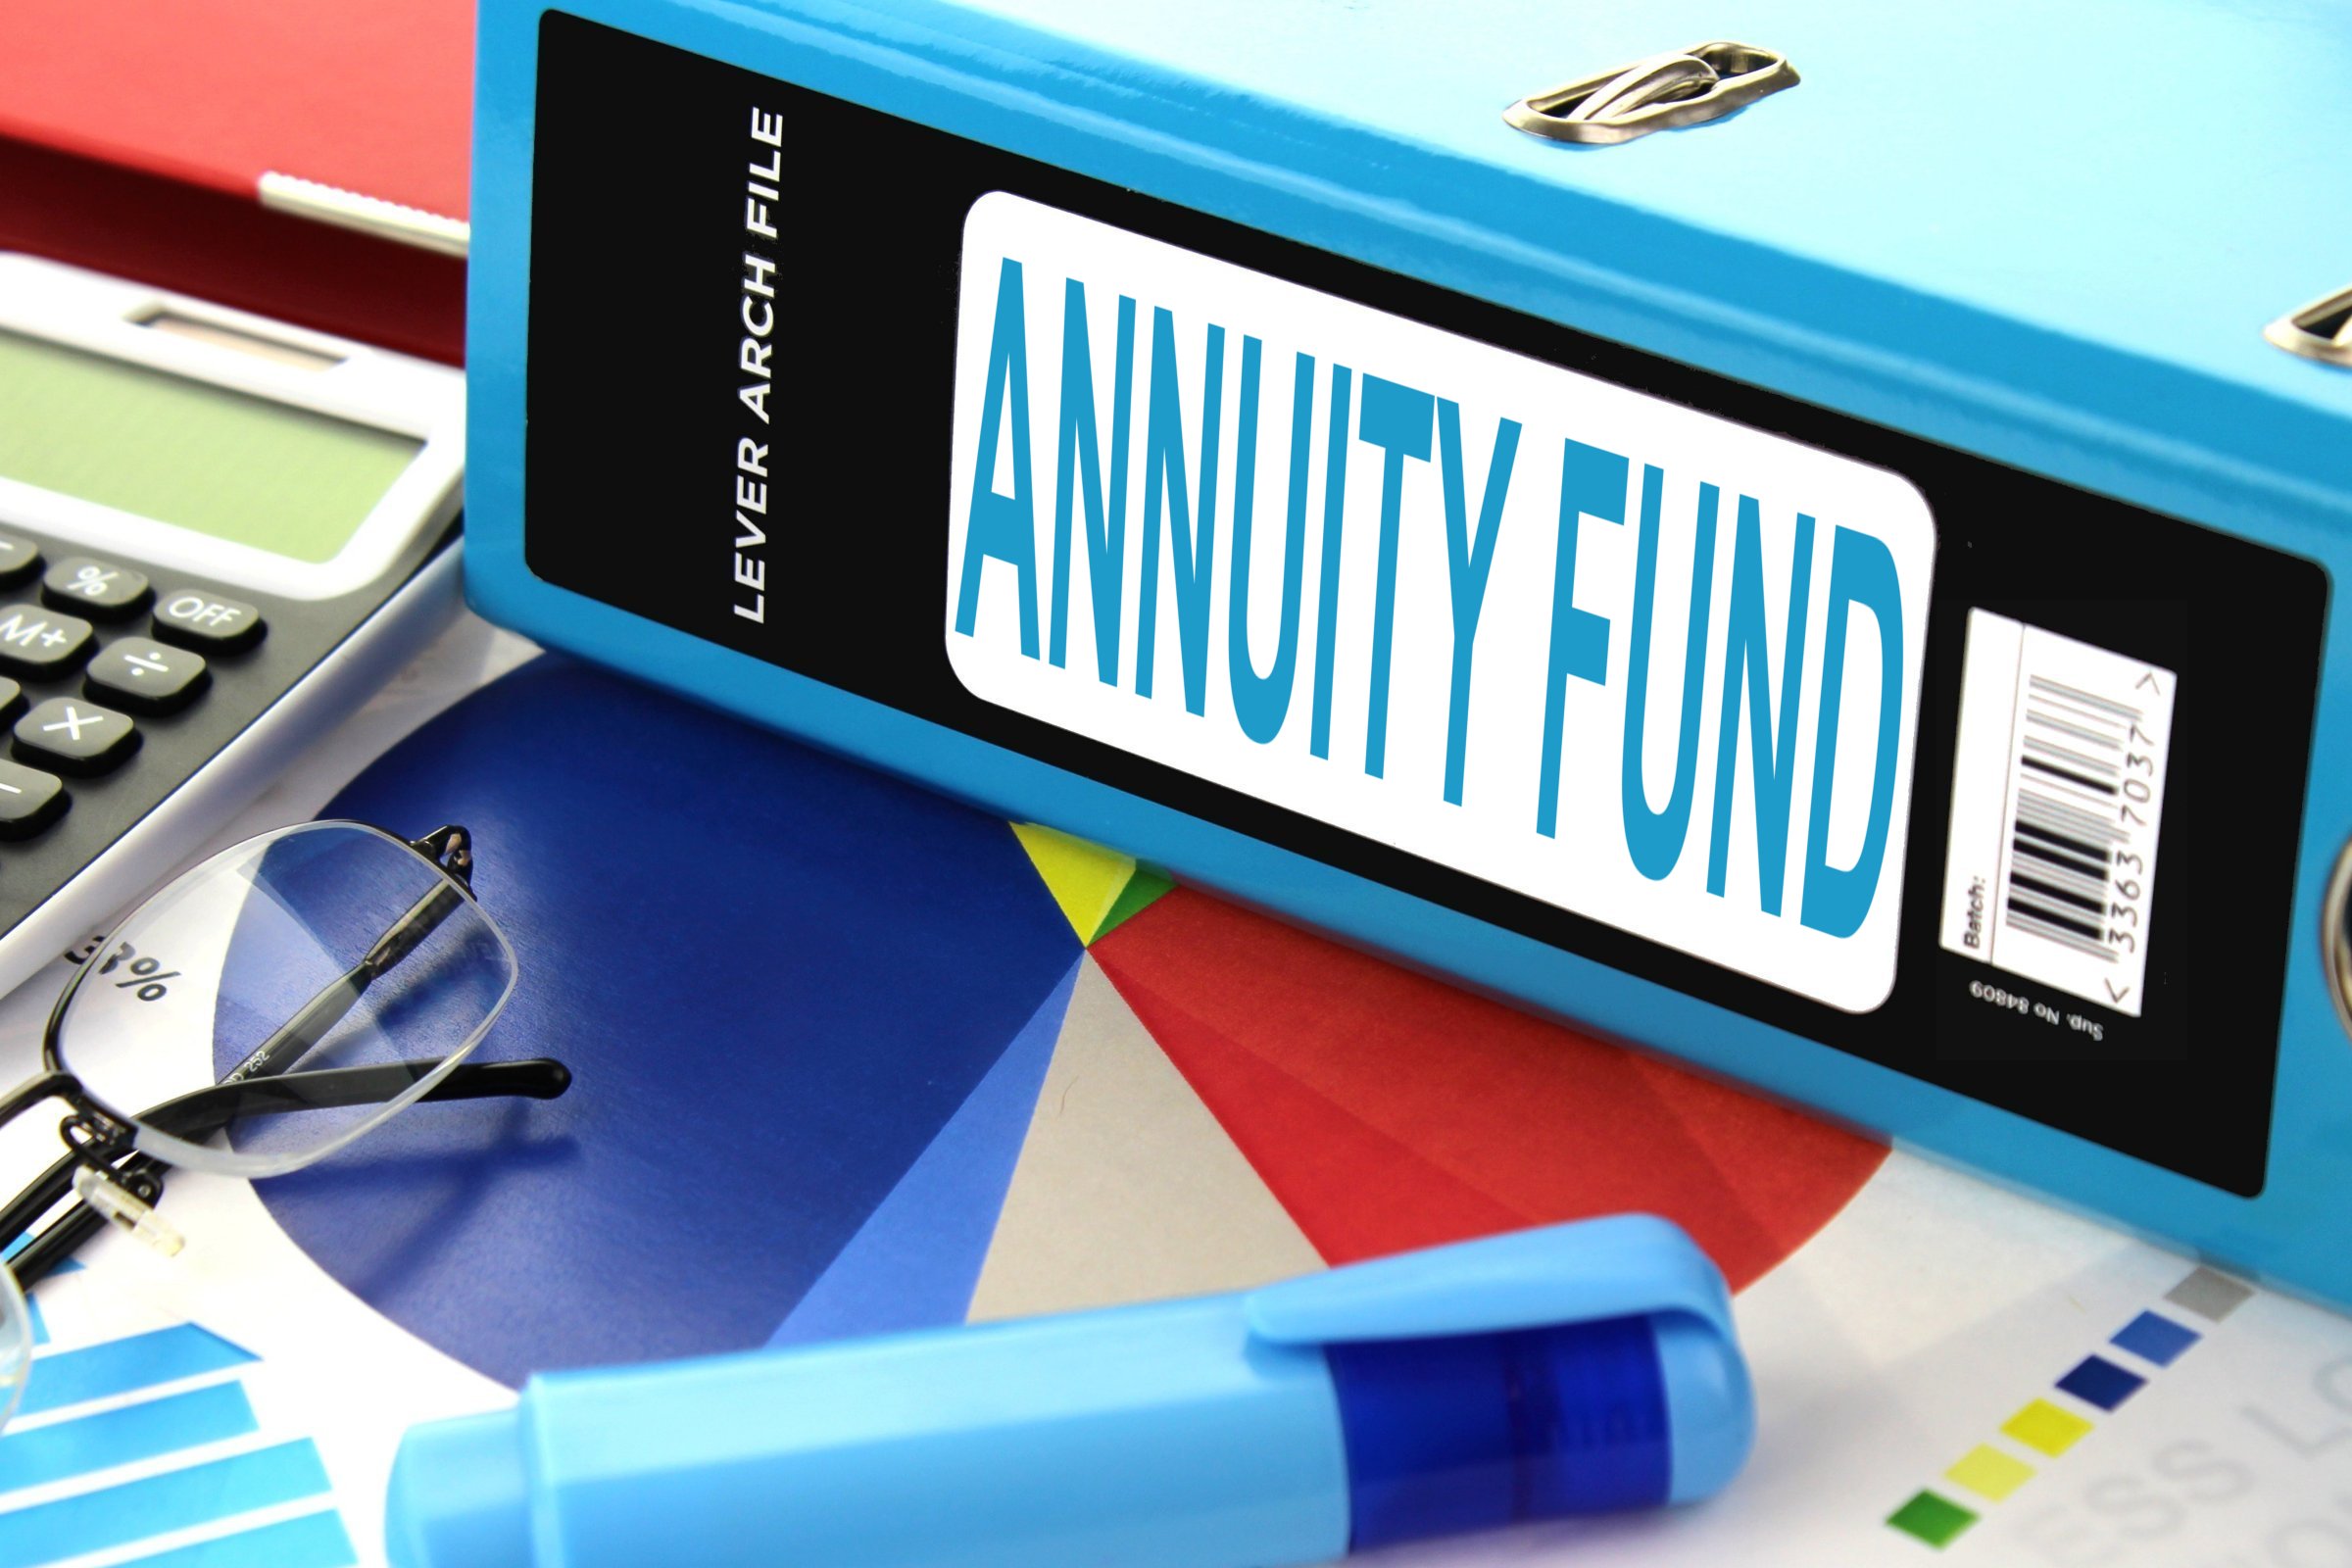 annuity fund